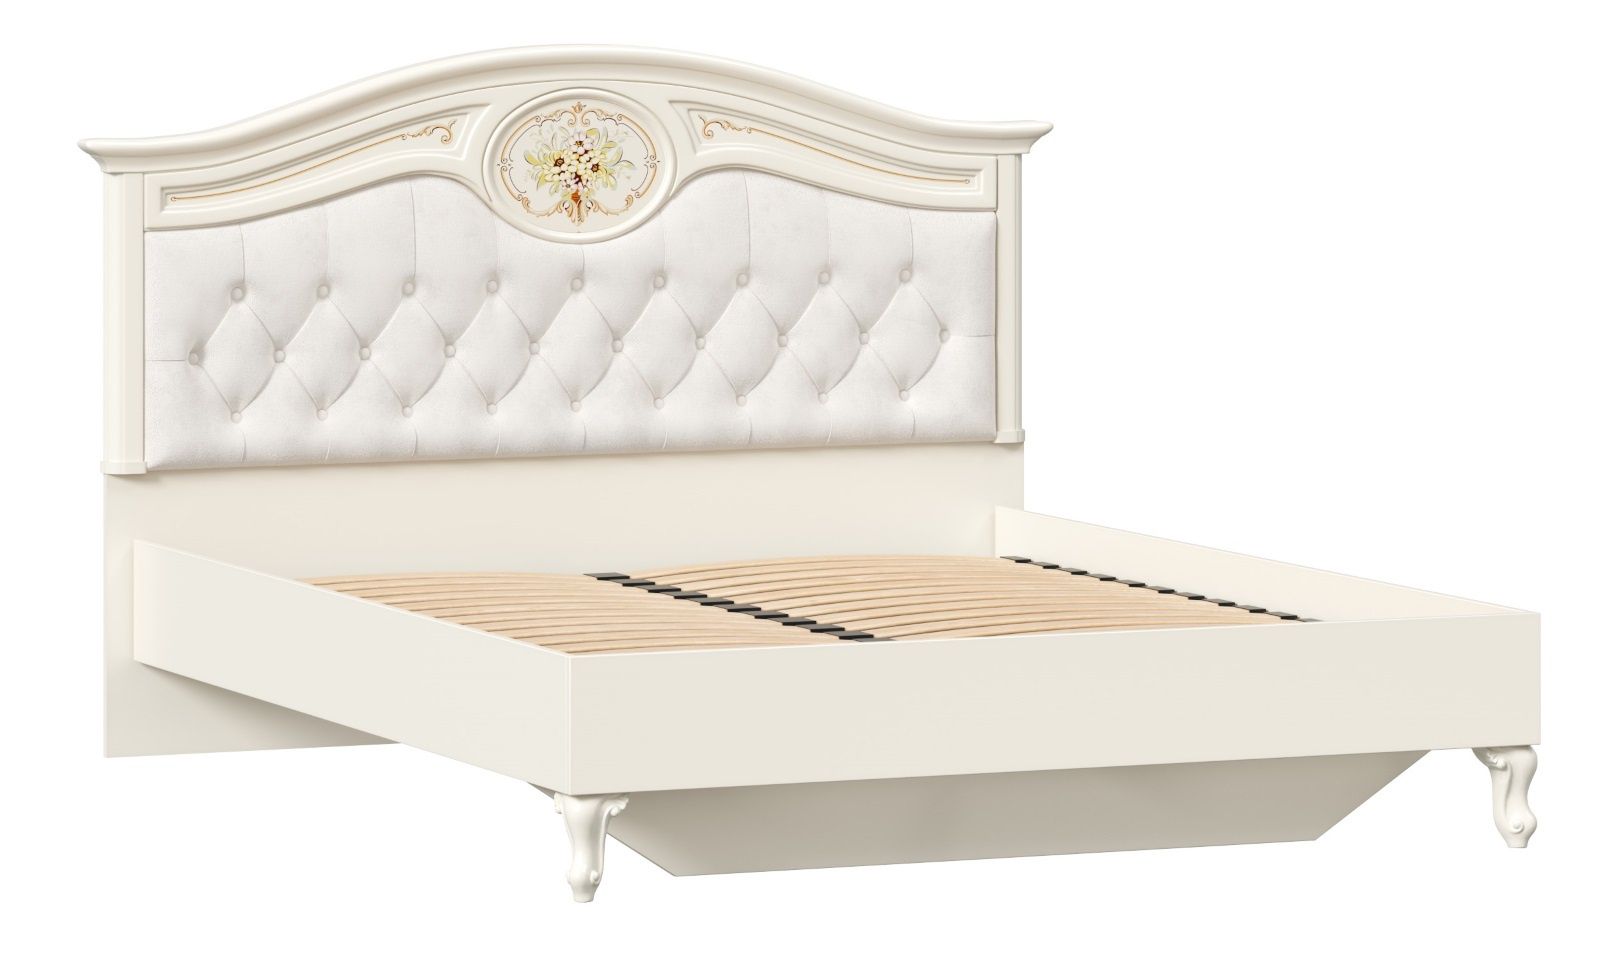 Manželská postel s roštem Valentina 160x200cm - alabastr - Nábytek Harmonia s.r.o.